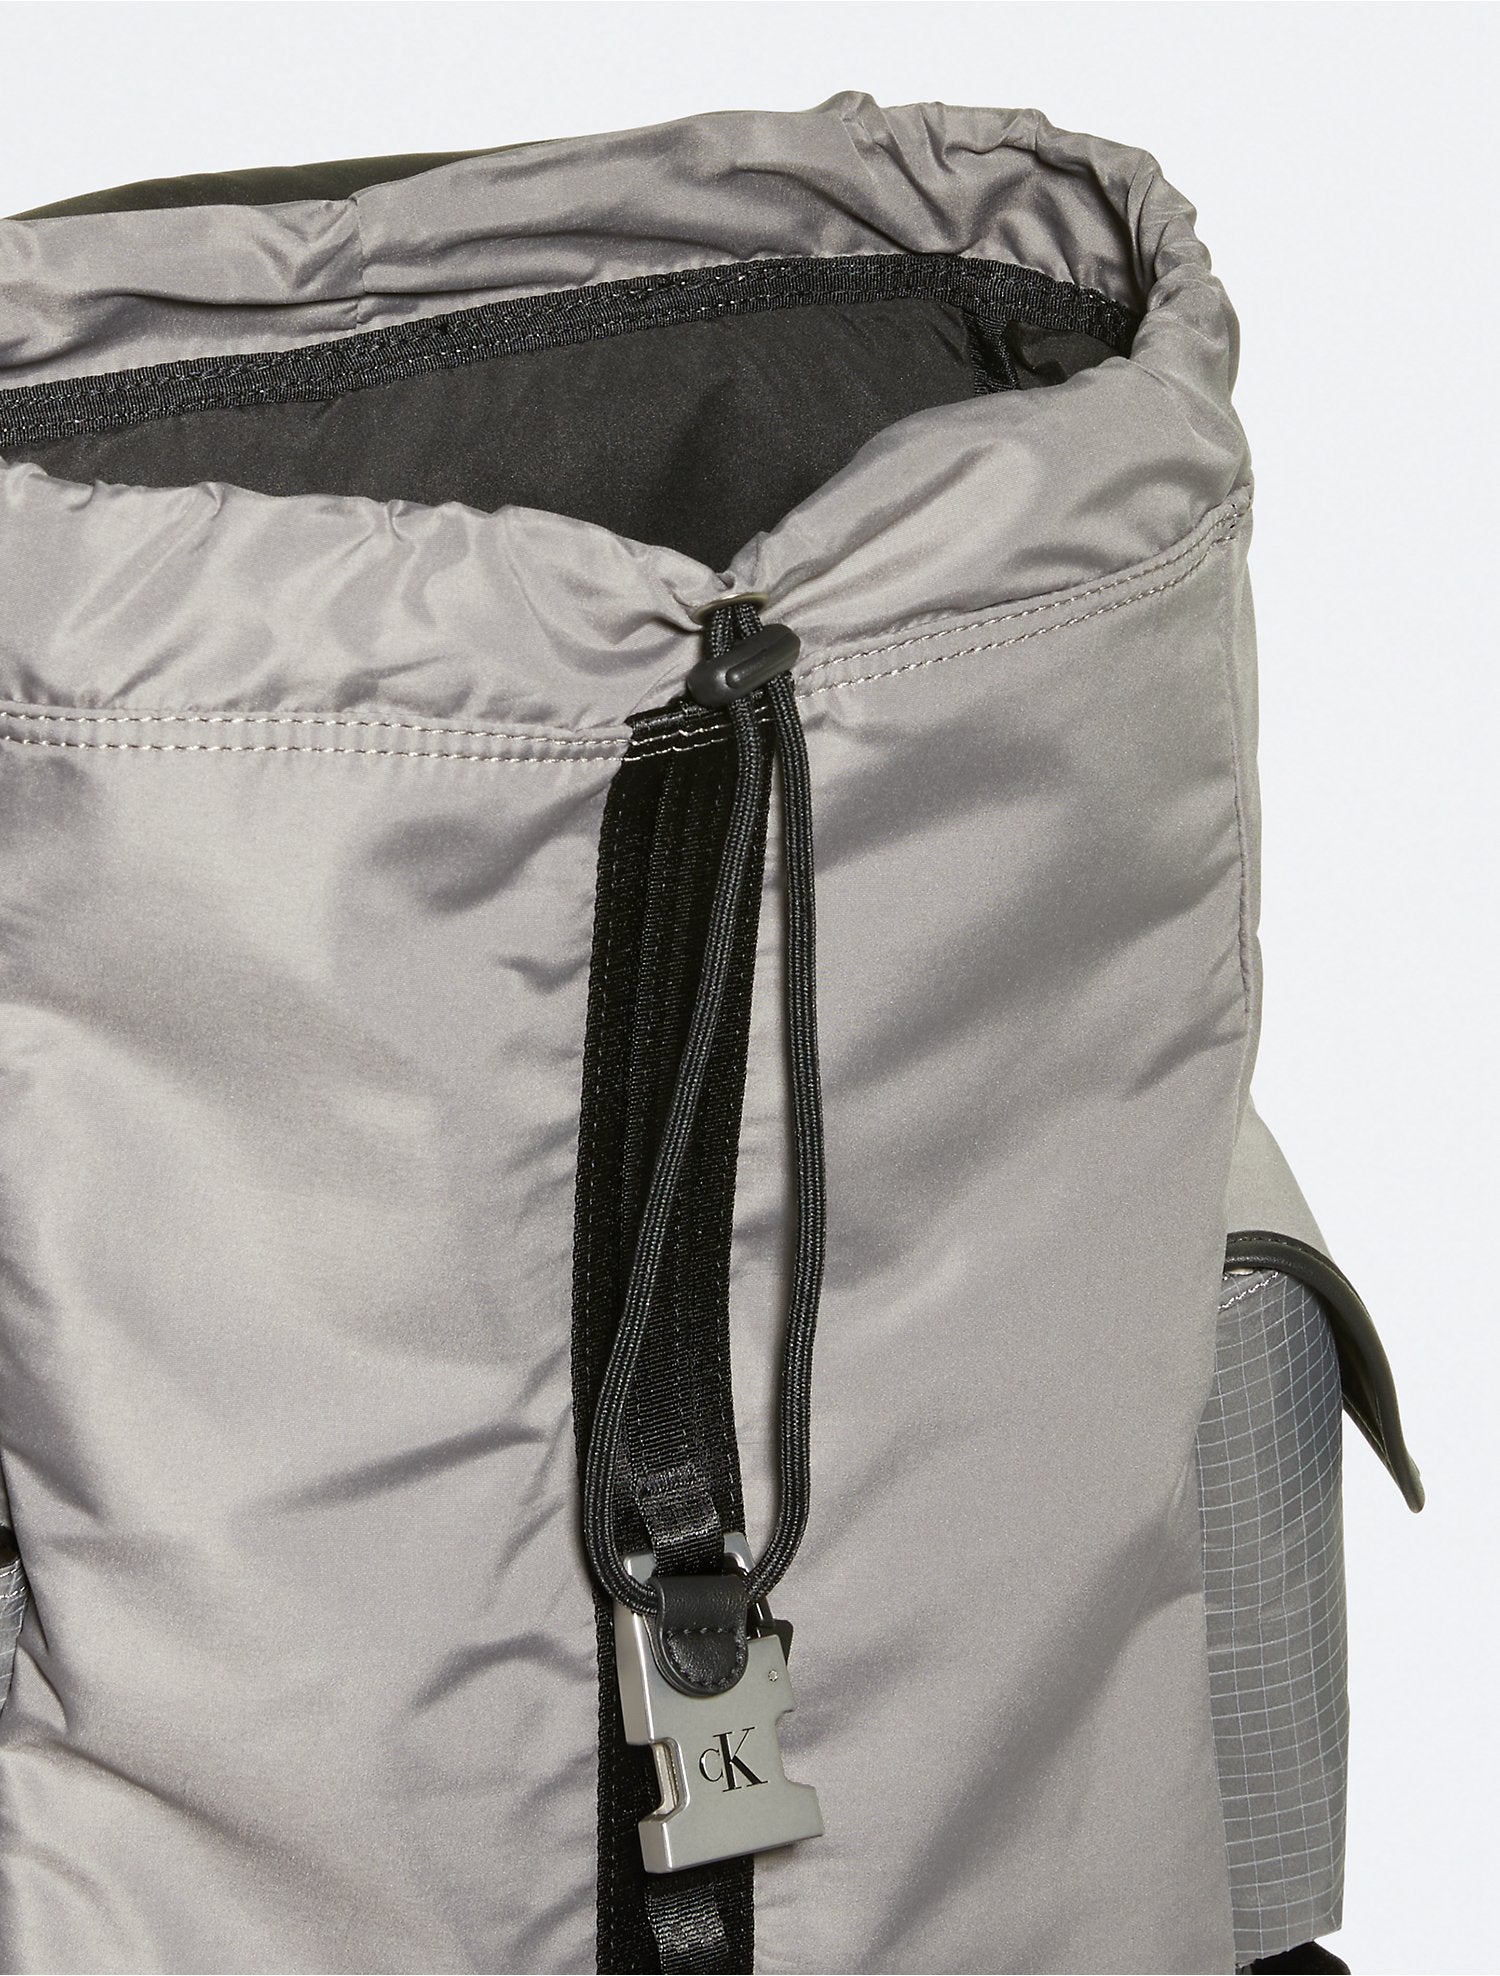 Calvin Klein Industrial Nylon Flap Backpack - Men